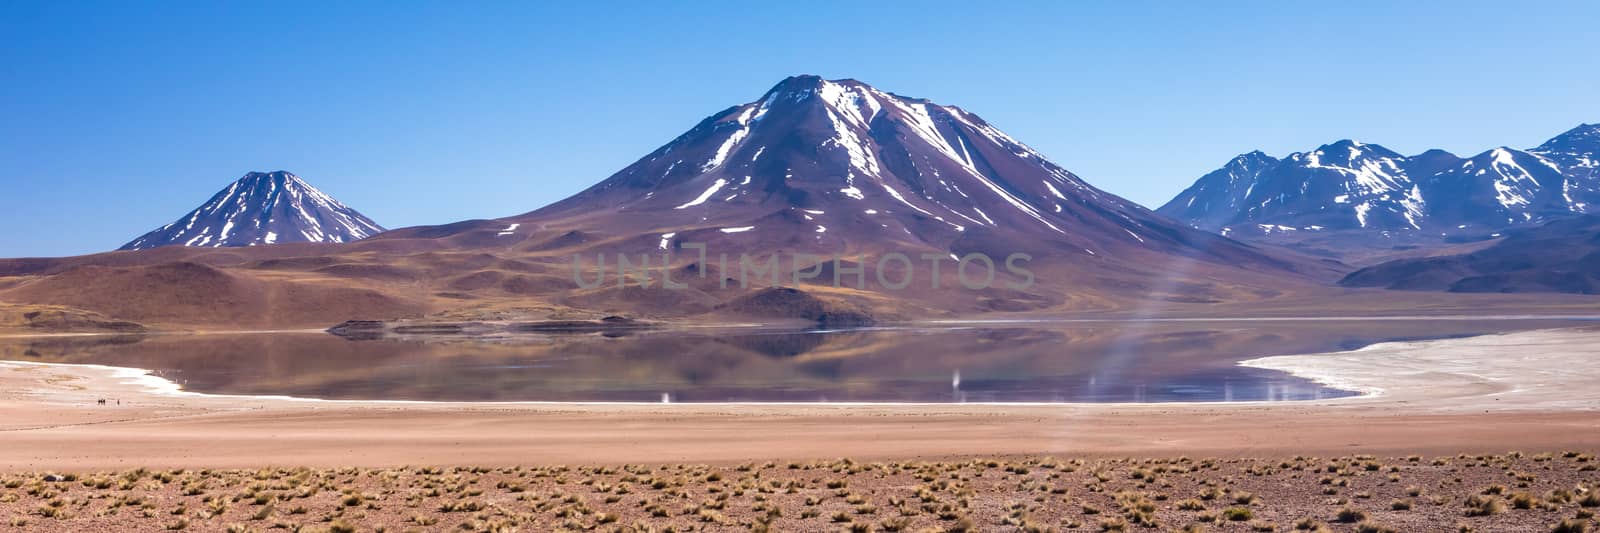 Lagunas Altiplanicas, Miscanti y Miniques, amazing view at Atacama Desert. Chile, South America. by SeuMelhorClick